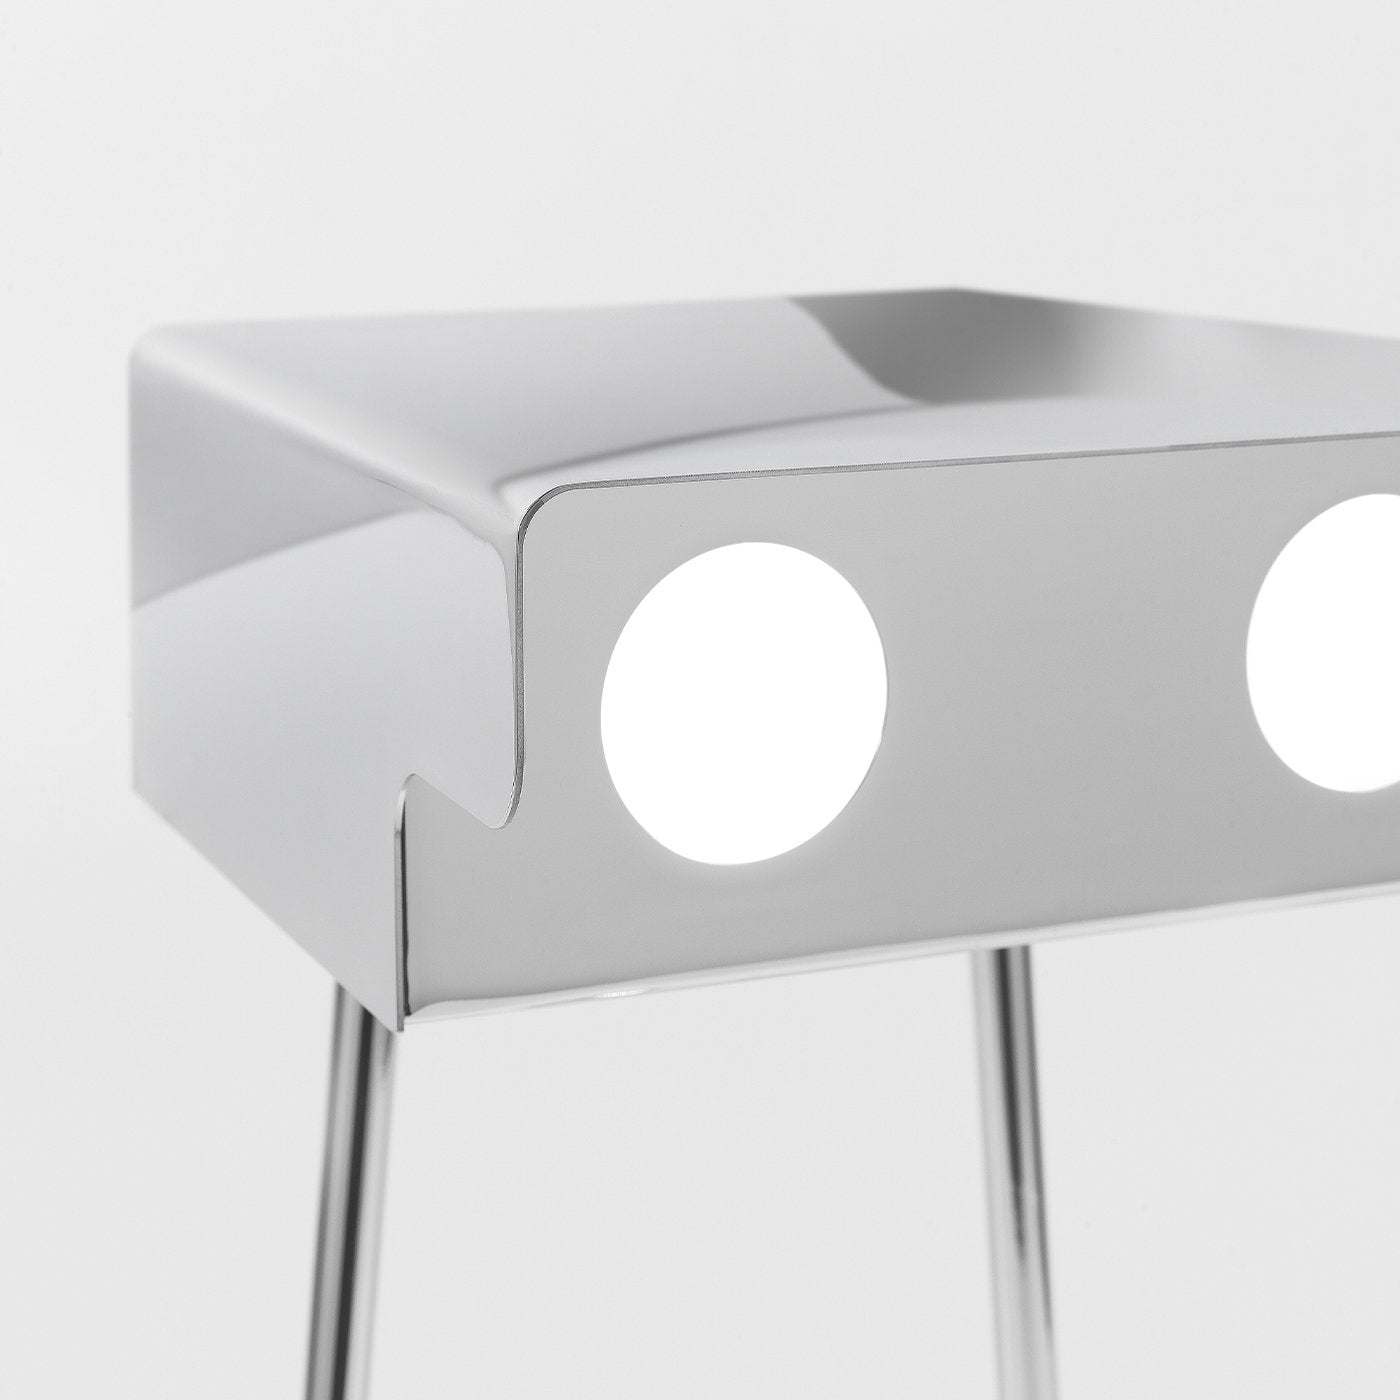 Betoo Table Lamp by Richard Hutten - Alternative view 1